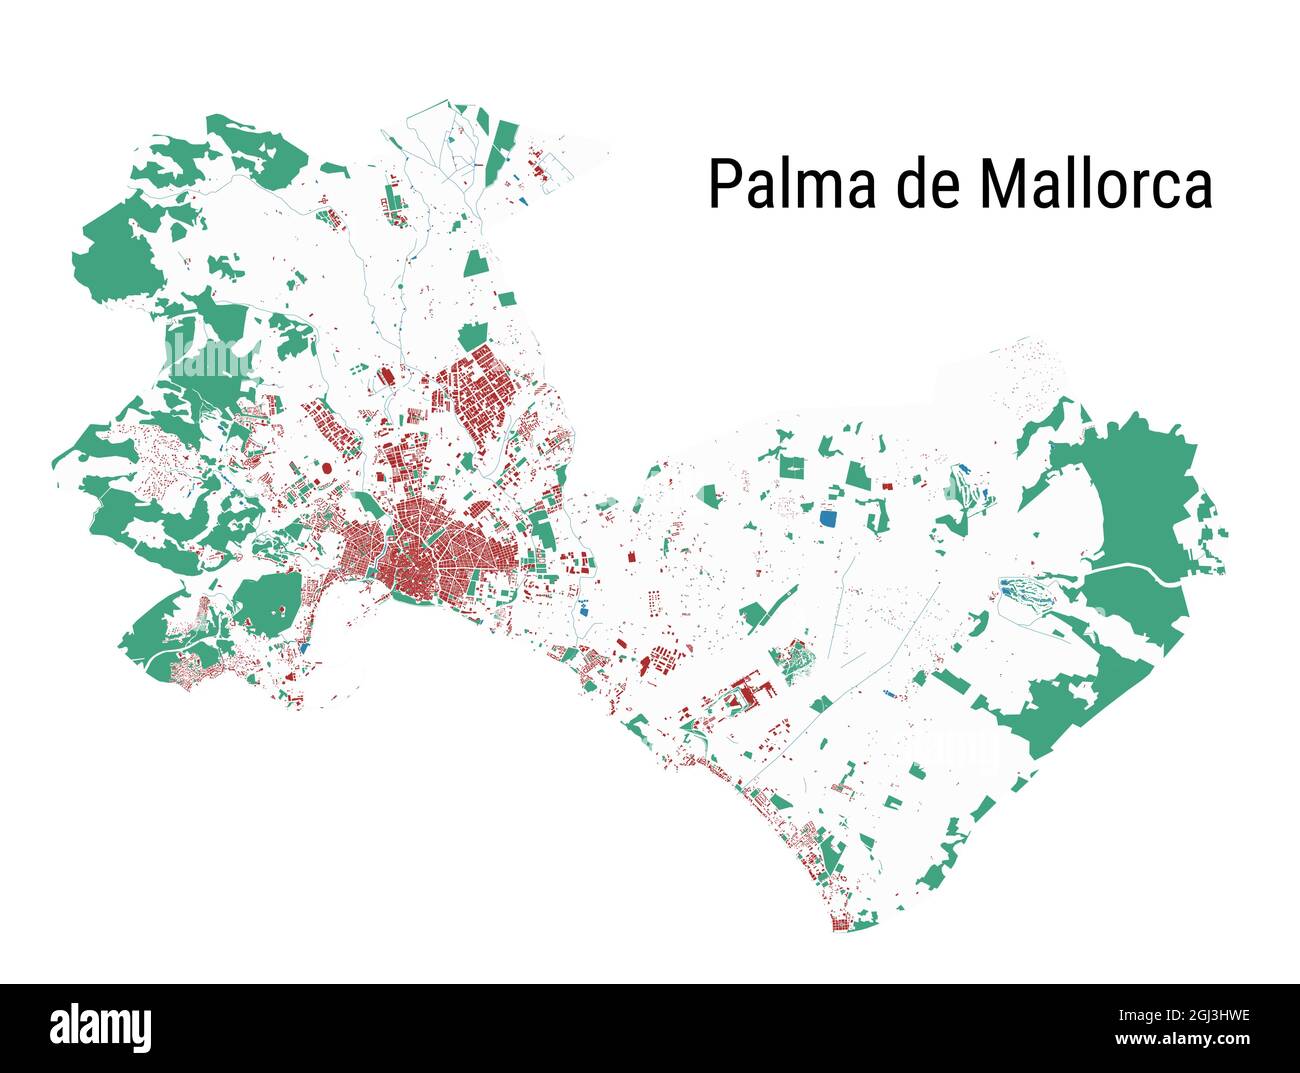 Karte von Palma de Mallorca. Detaillierte Karte von Palma de Mallorca Stadtverwaltung. Stadtbild-Panorama. Lizenzfreie Vektorgrafik. Übersichtskarte w Stock Vektor